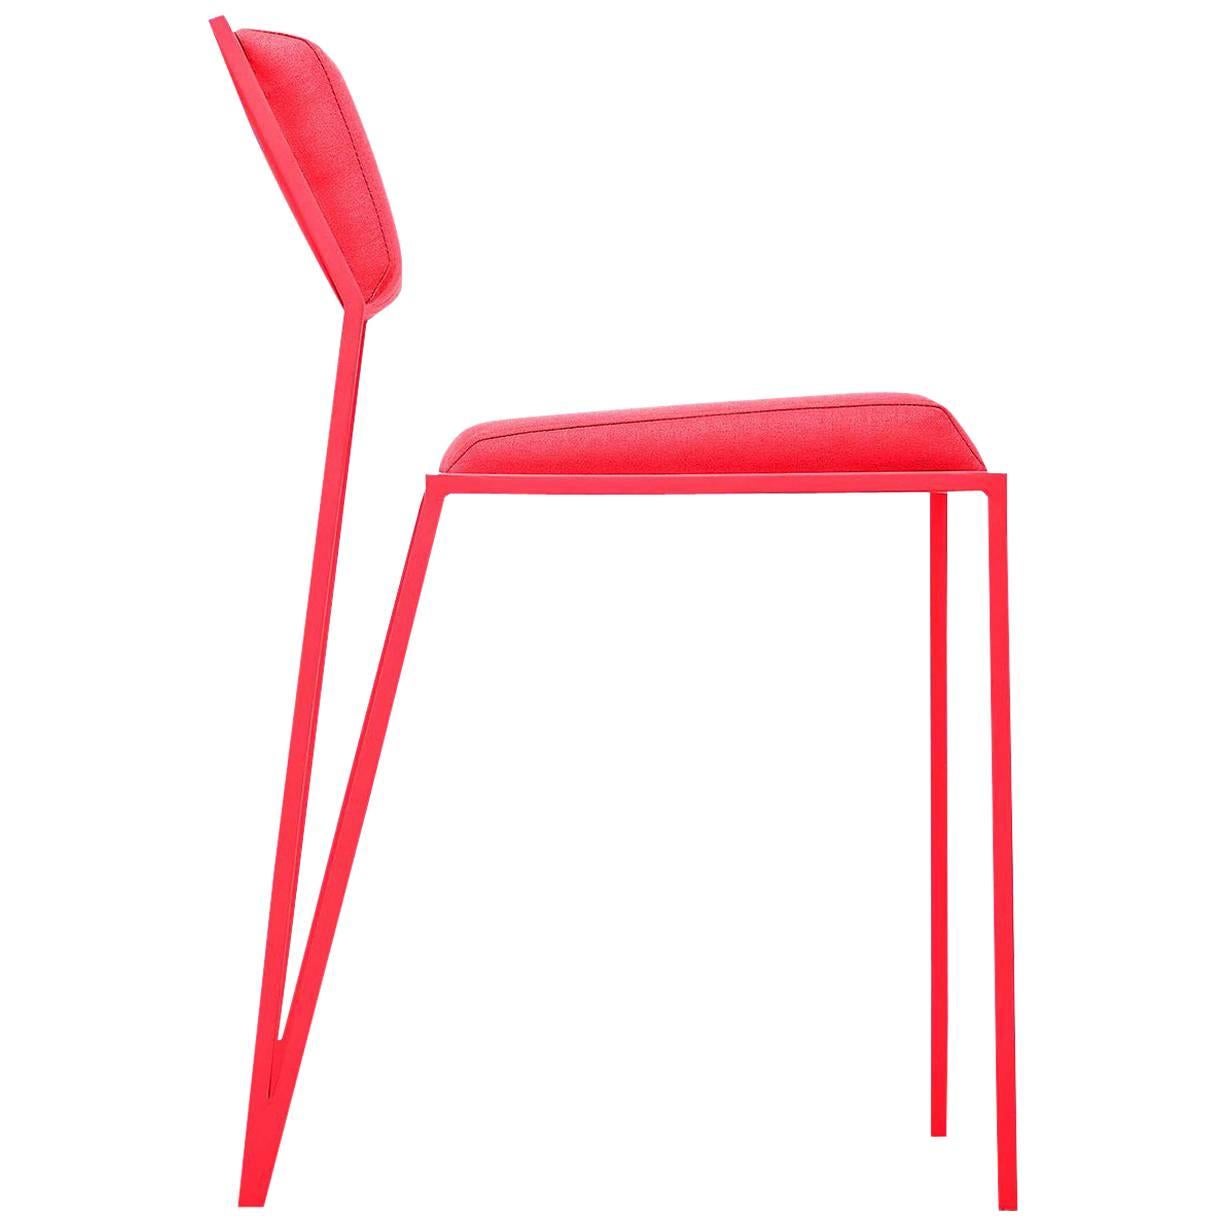 Minimalist Chair in Brazilian Contemporary Design, by Tiago Curioni